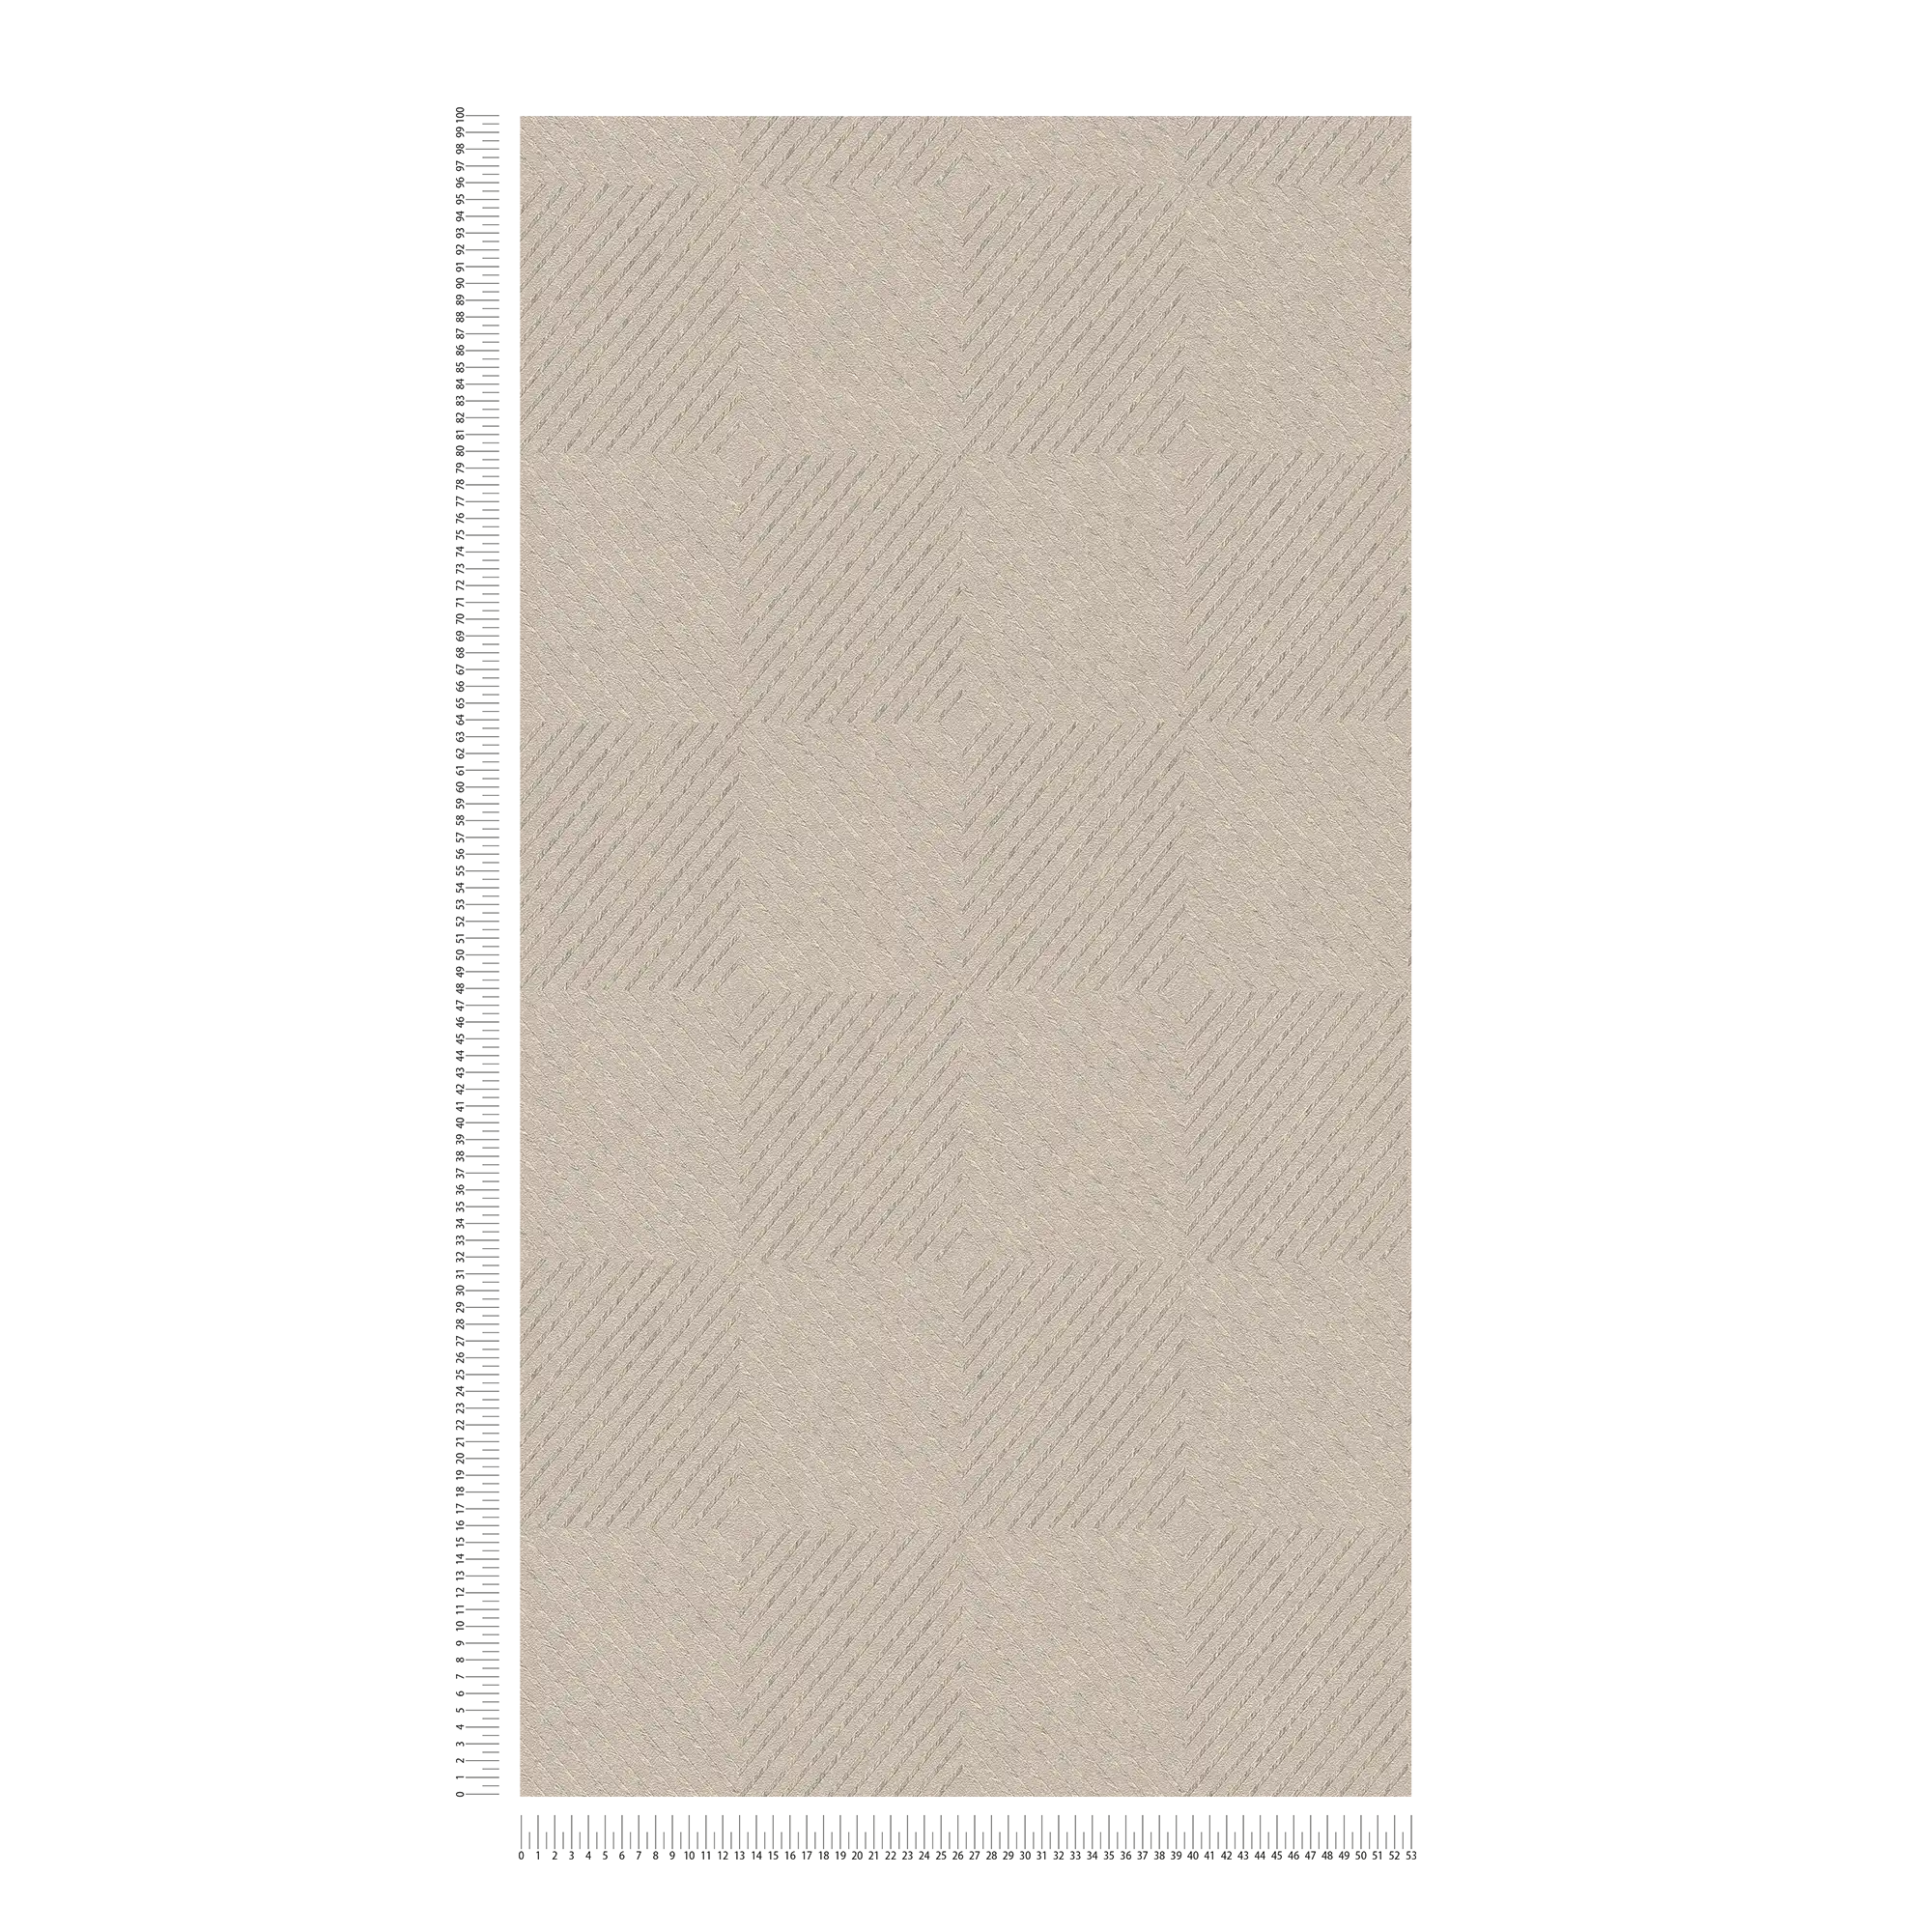             carta da parati design grafico, stile scandinavo - beige, argento
        